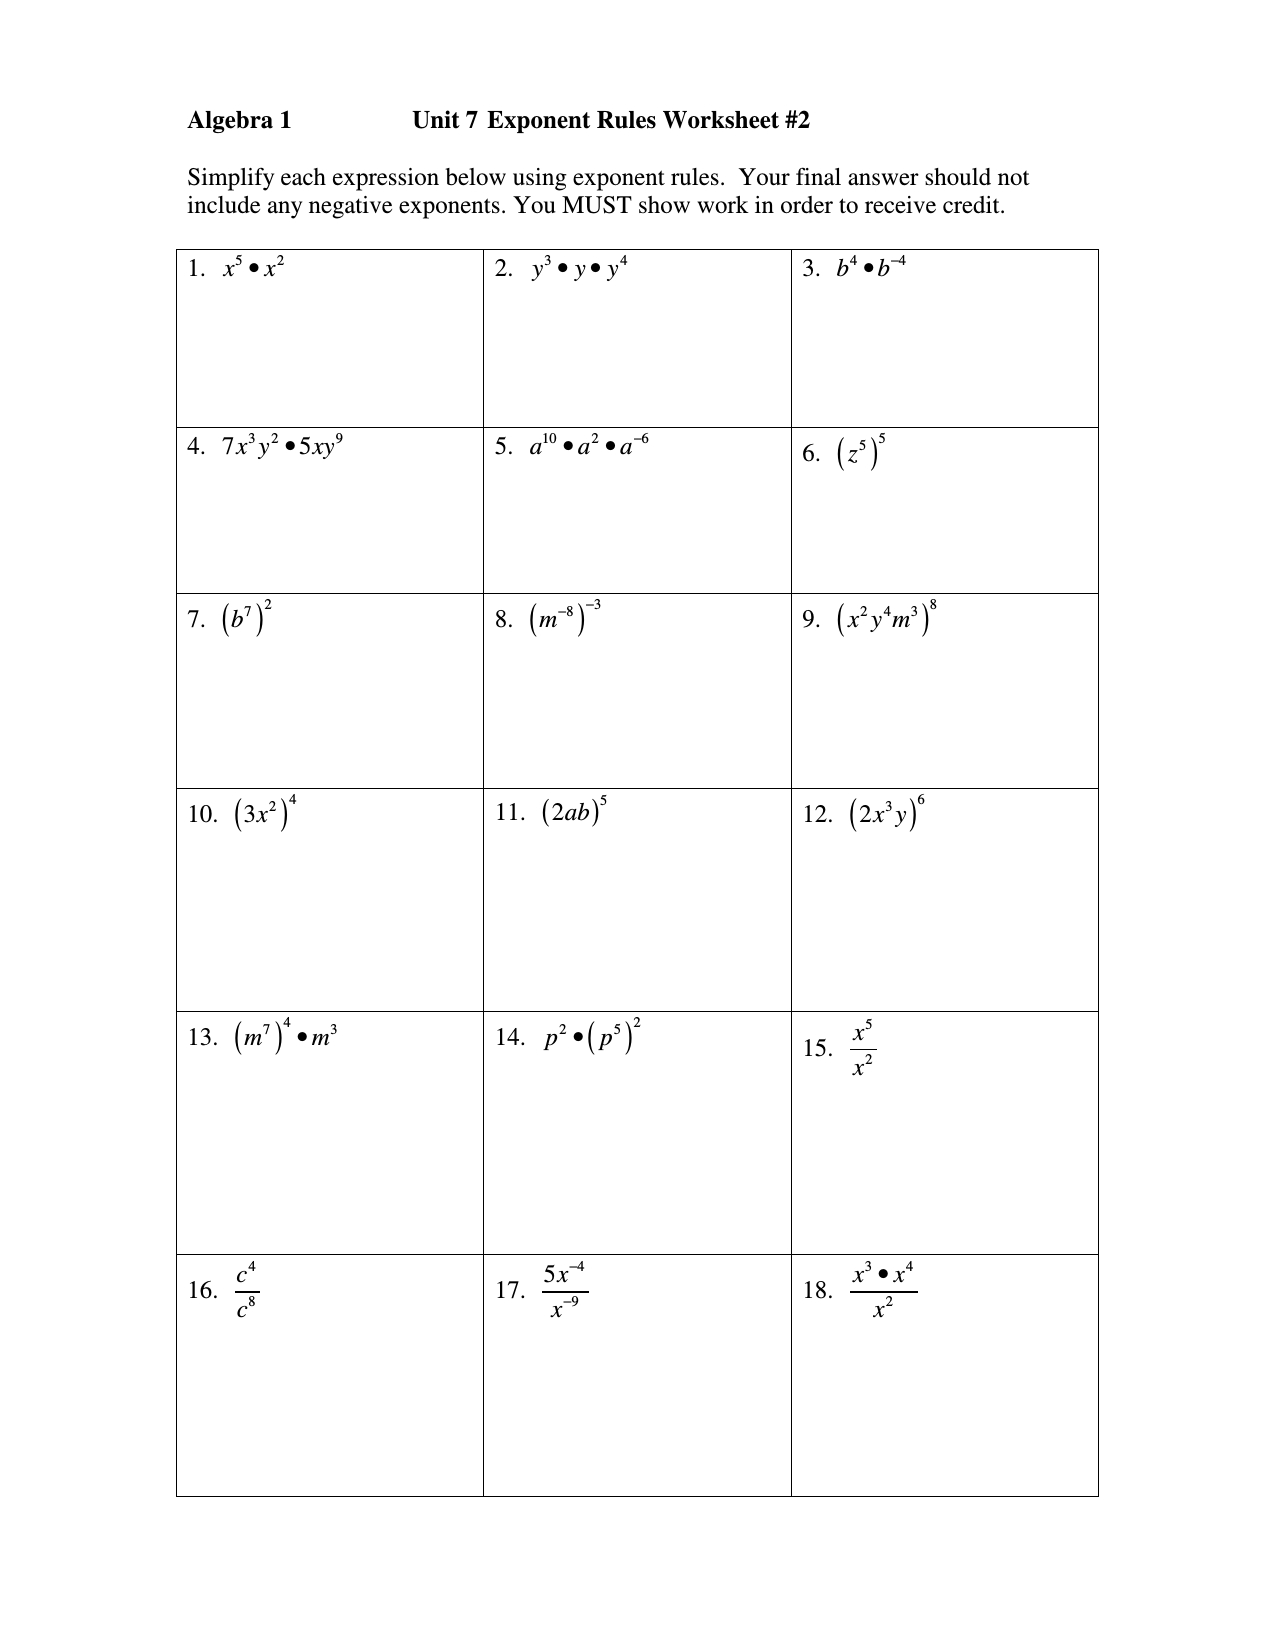 Brilliant Ideas Of Algebra 1 Unit 7 Exponent Rules Worksheet 2 Along With Exponent Rules Worksheet Answer Key